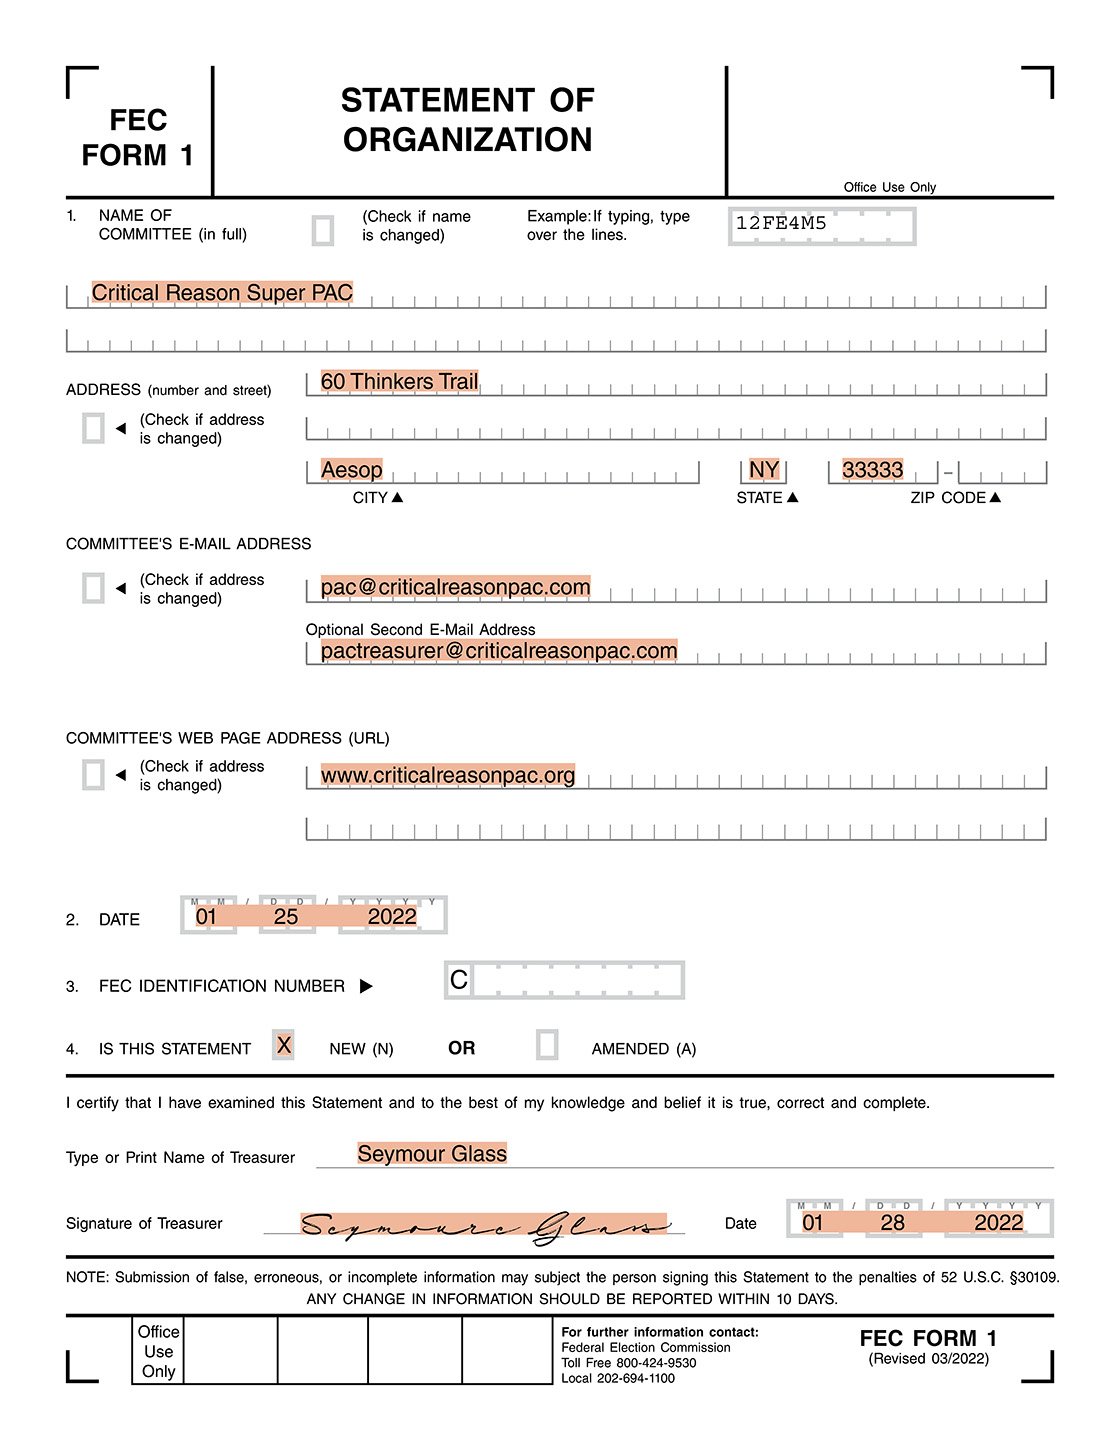 Super PAC Registration_Form 1_Page 1_fe309